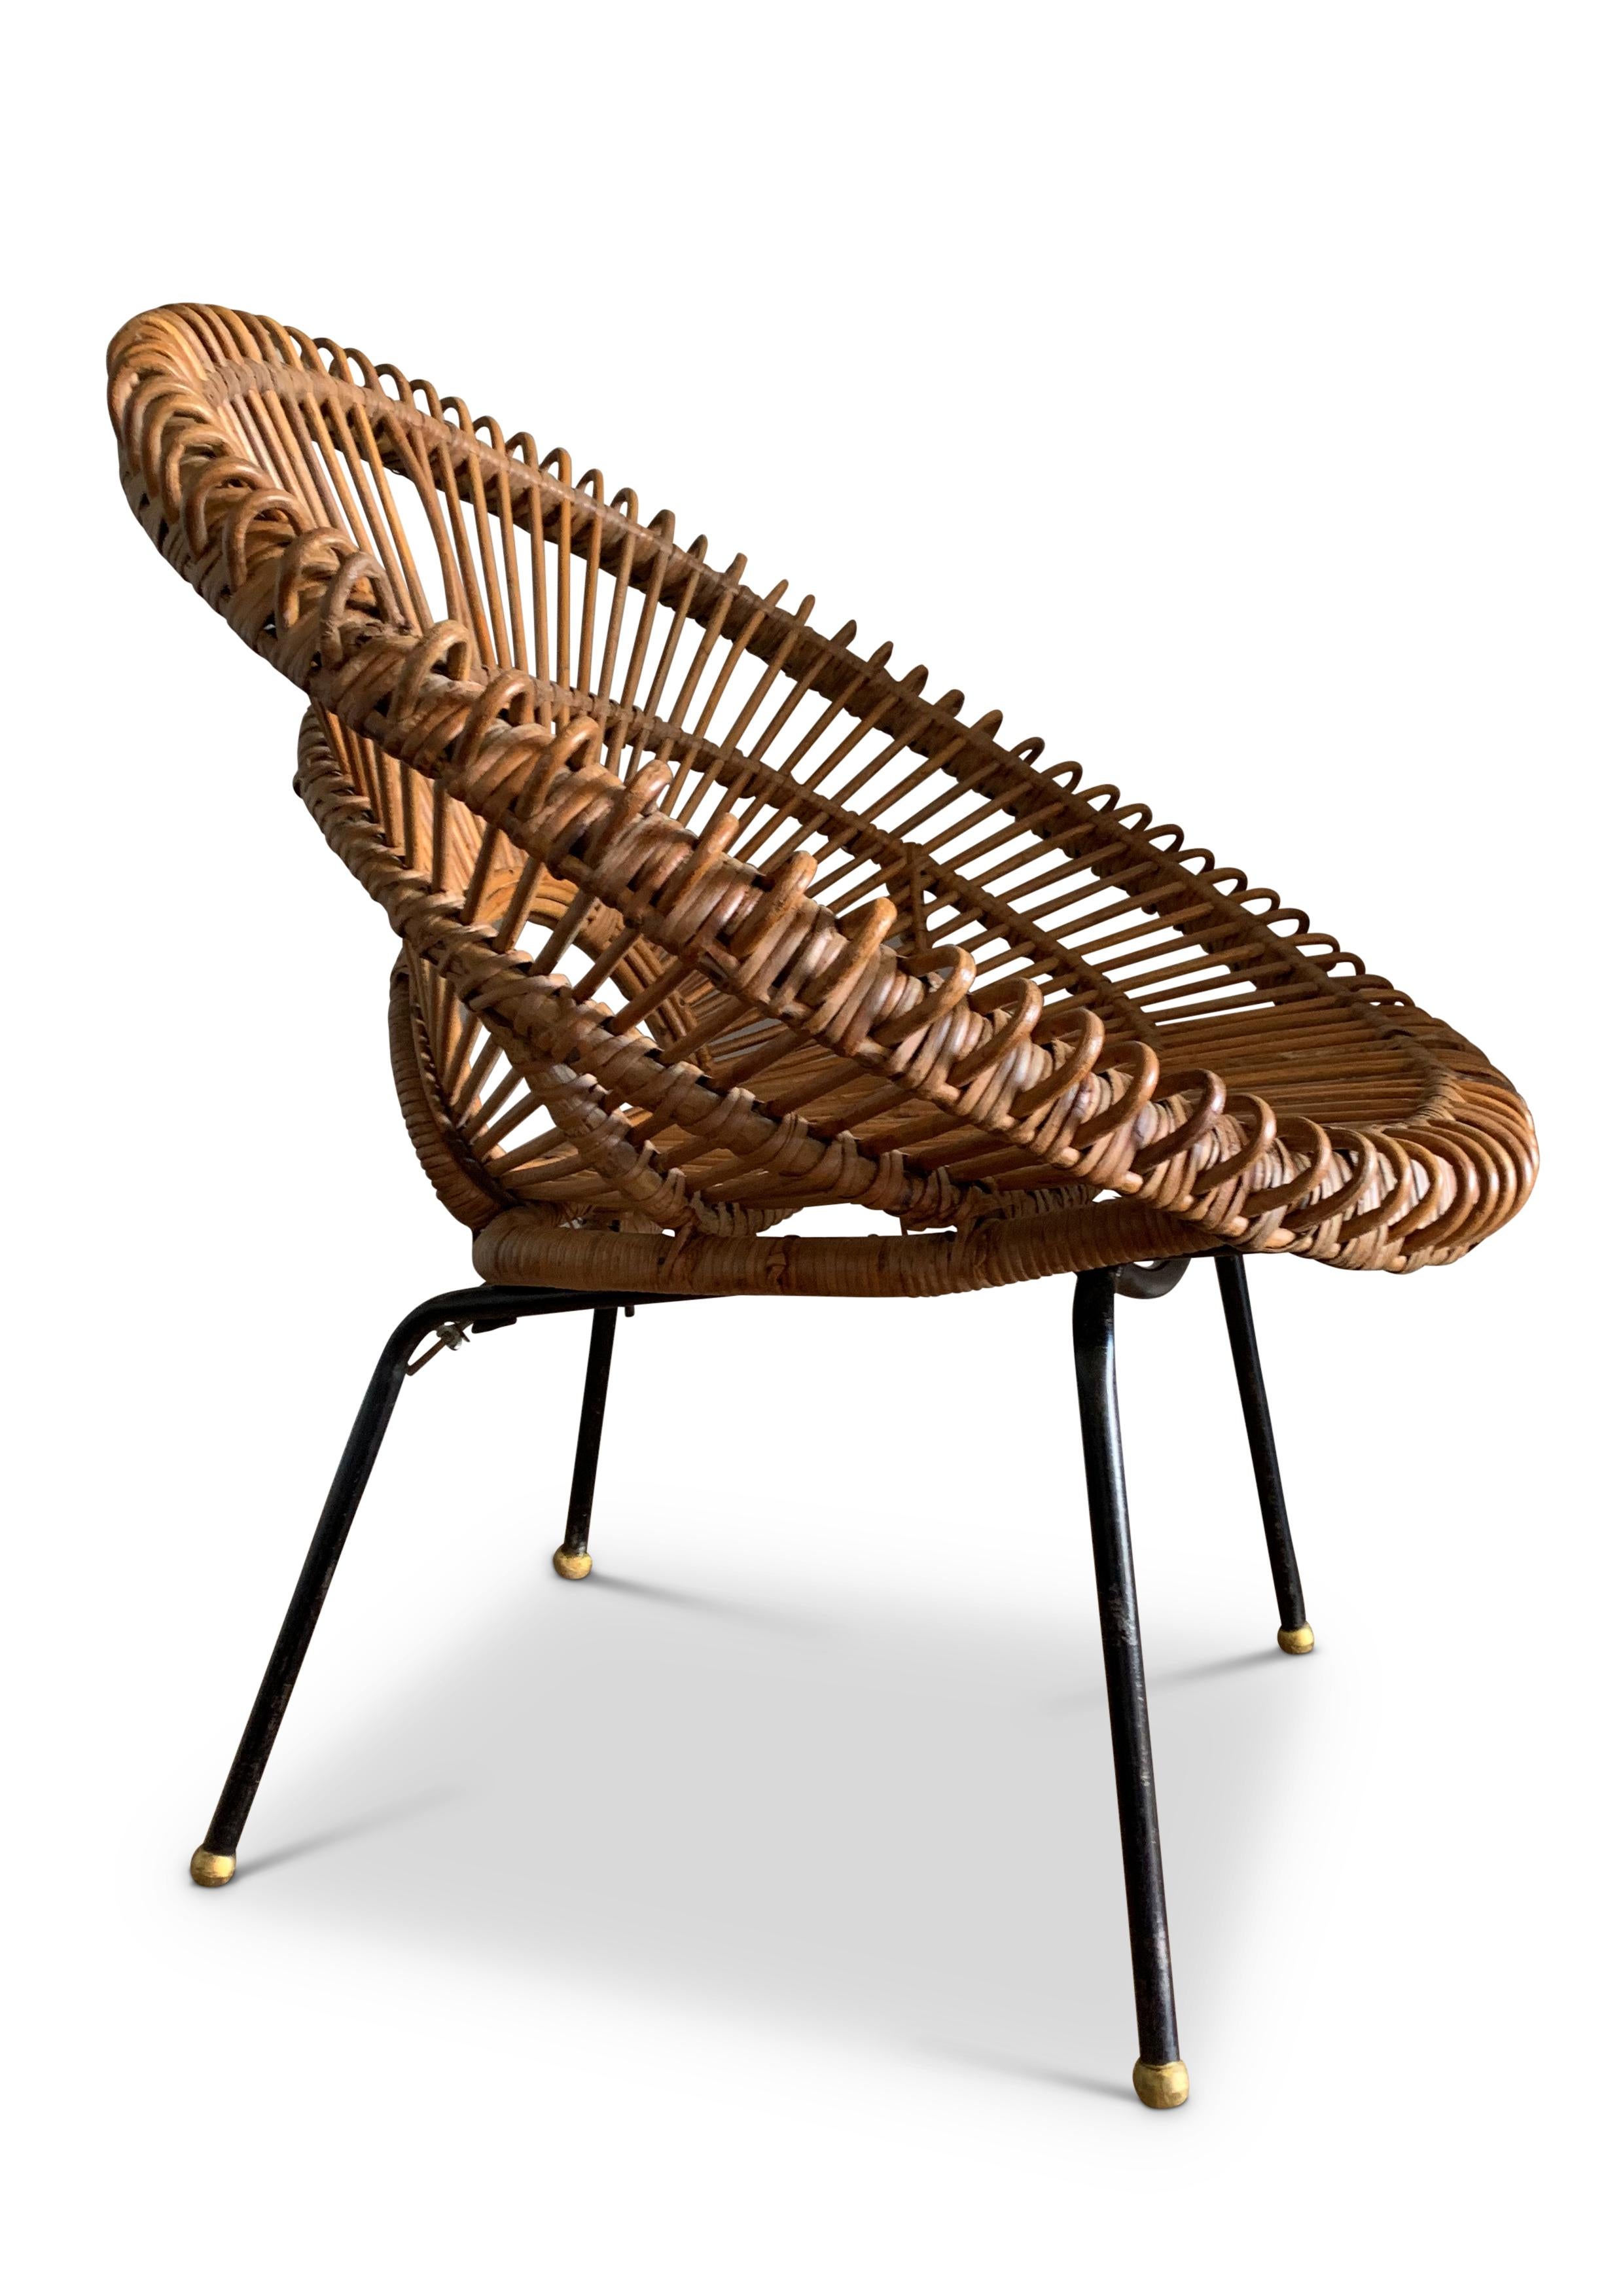 French Franco Albini Mid Century Bamboo Organic Sunburst Chair, 1950's For Sale